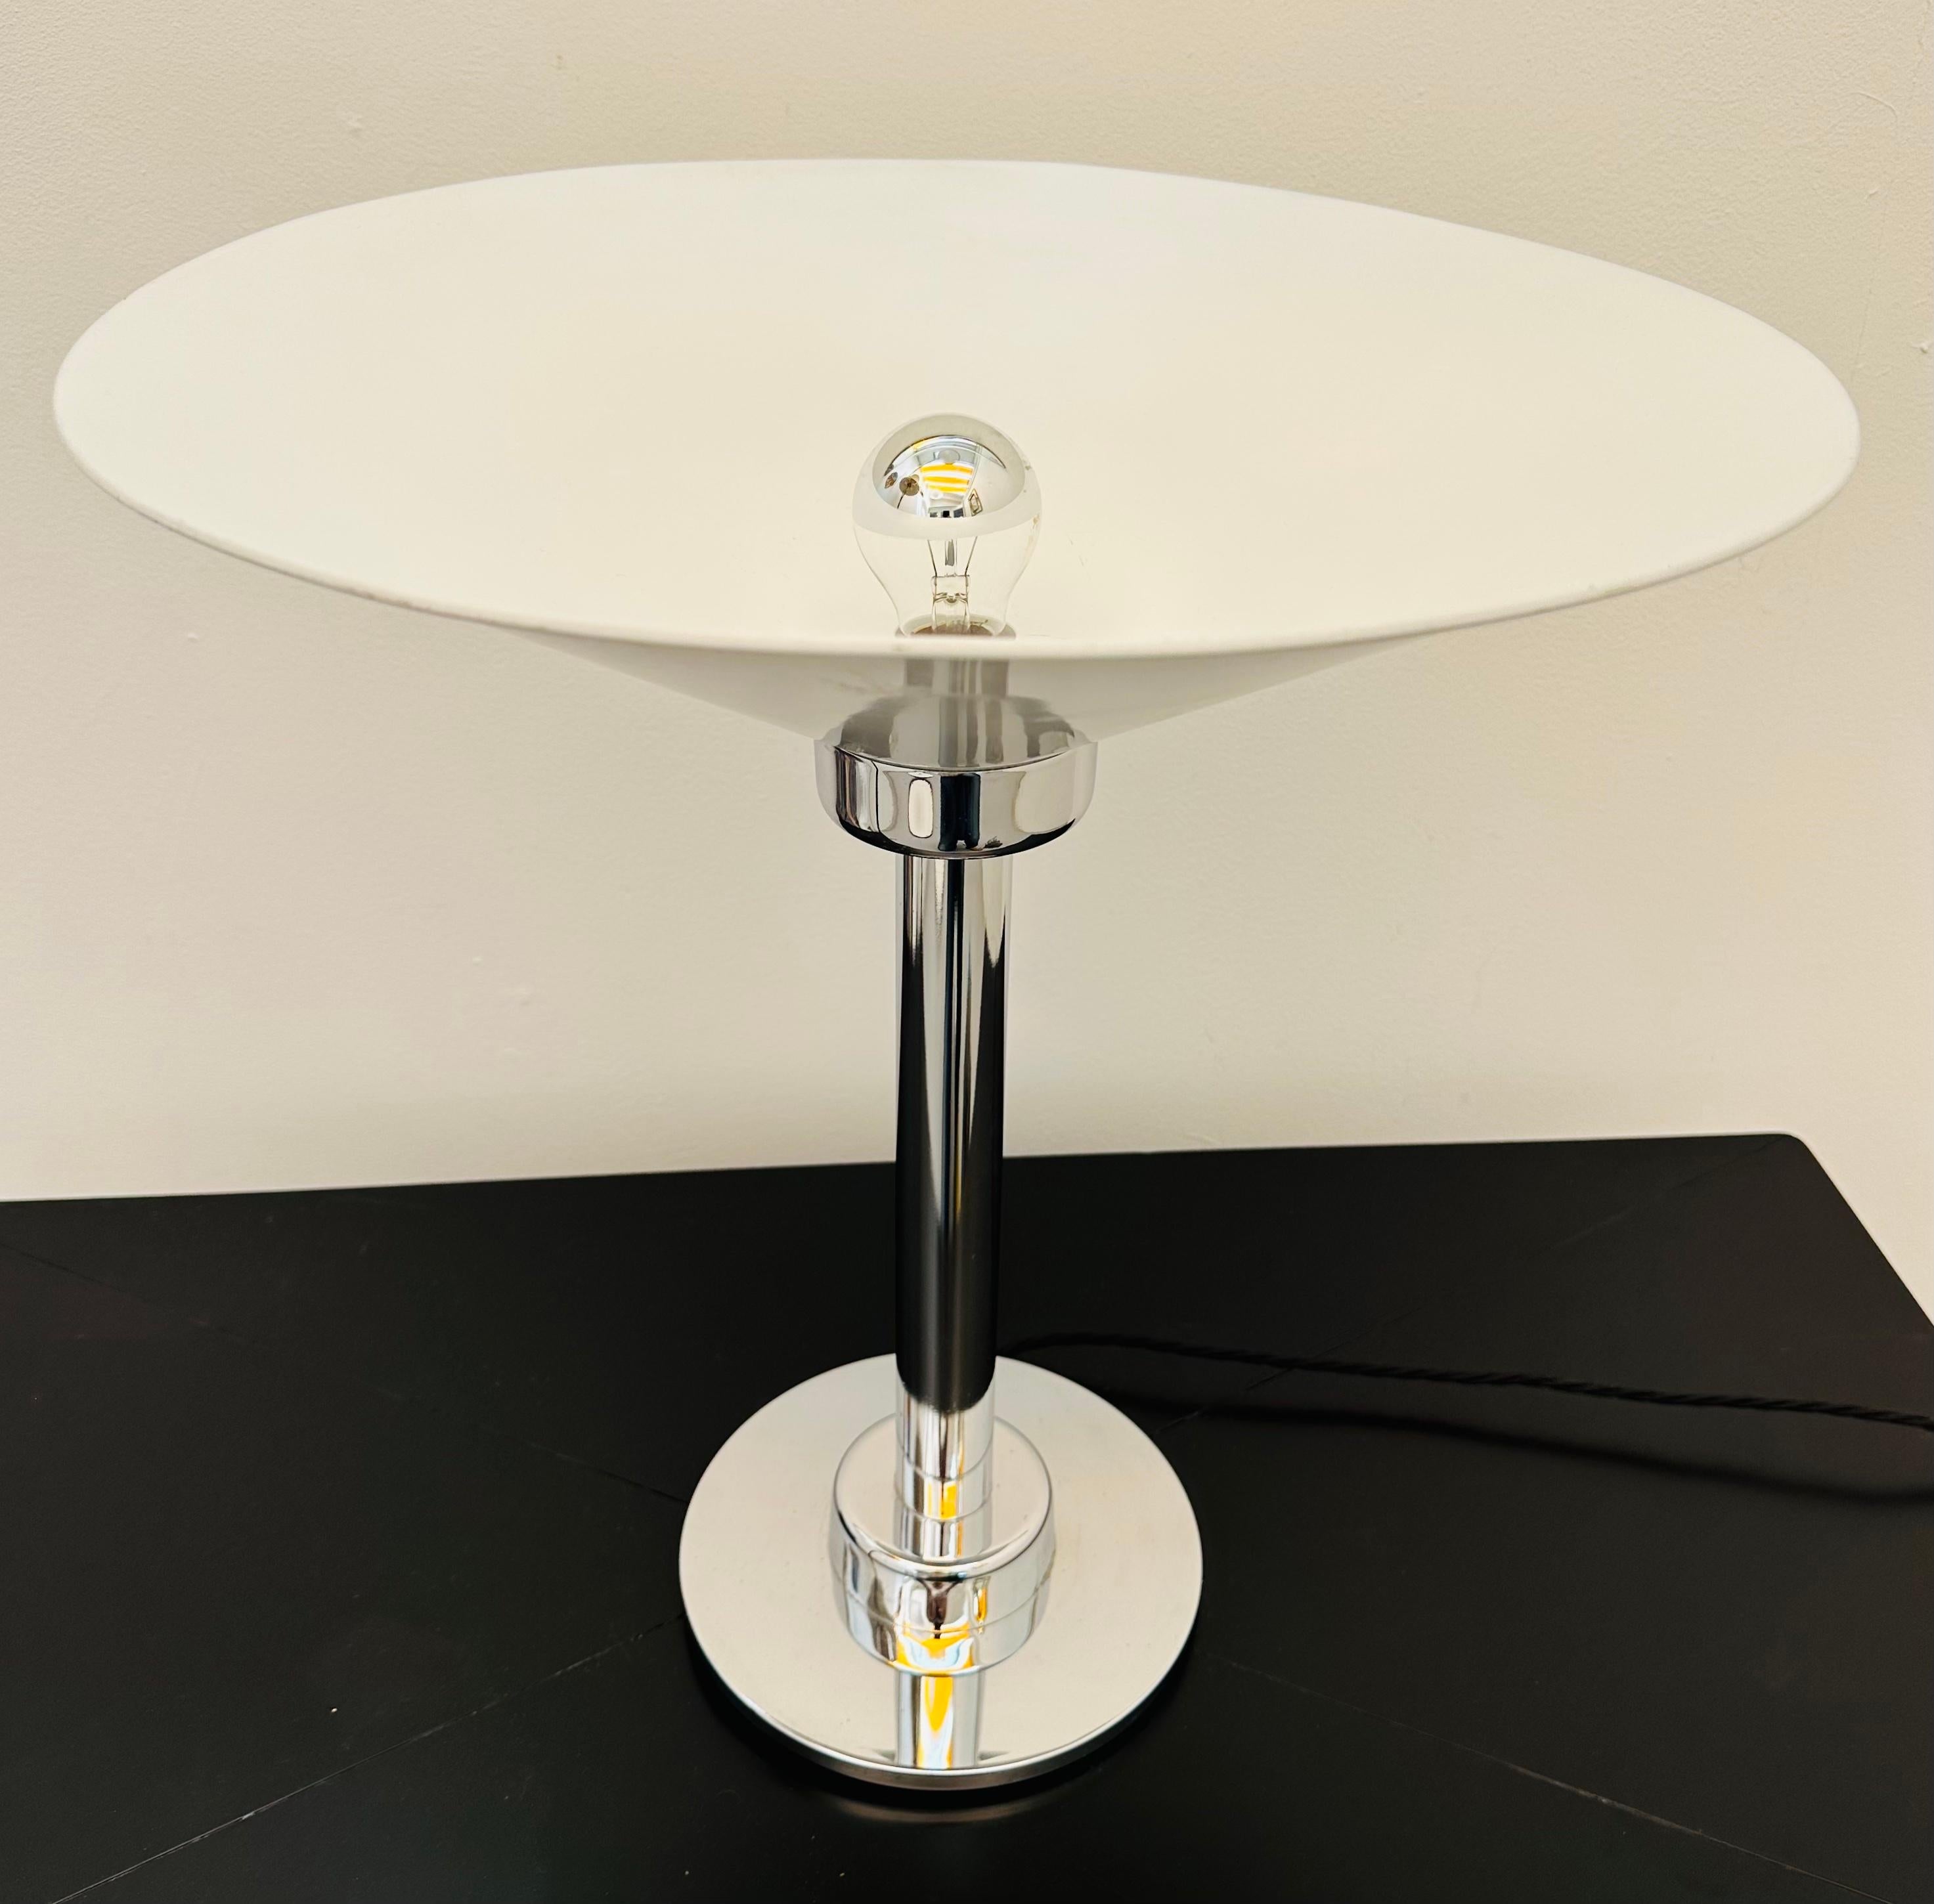 1970s Italian Conical Enamelled White Metal & Chrome Uplighter Table Lamp For Sale 7